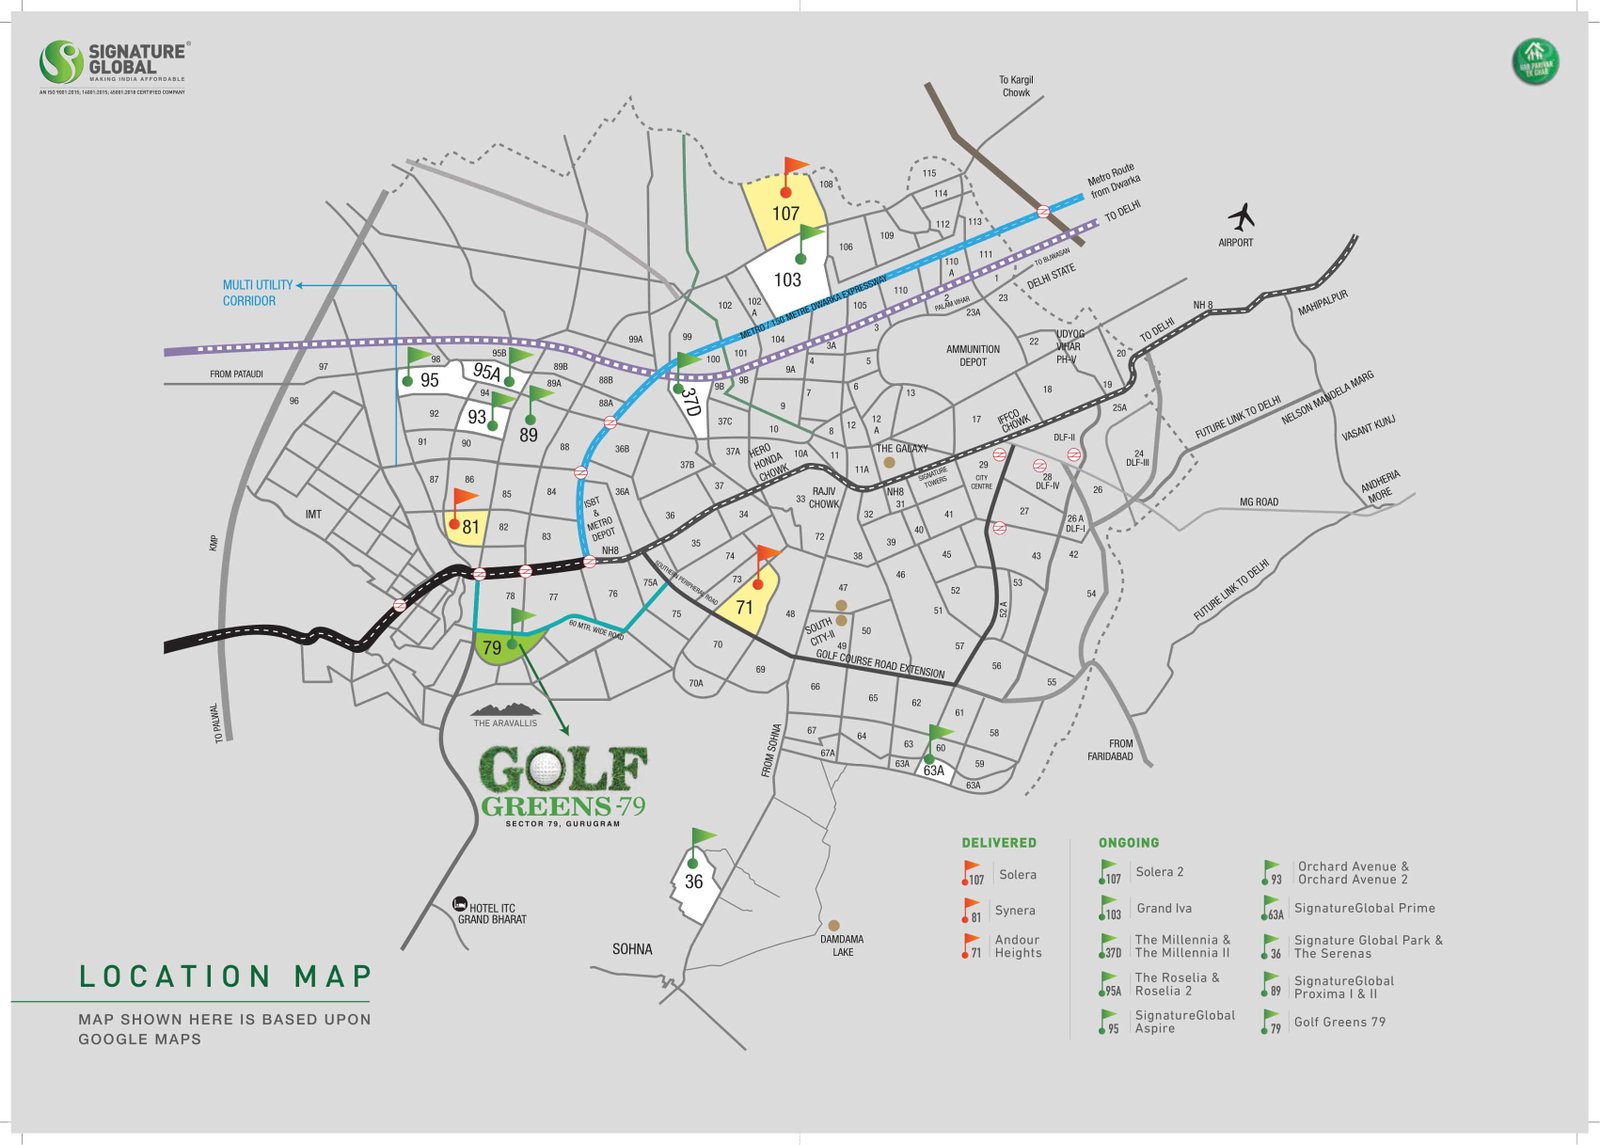 Signature Global Golf Greens 79 Location Map